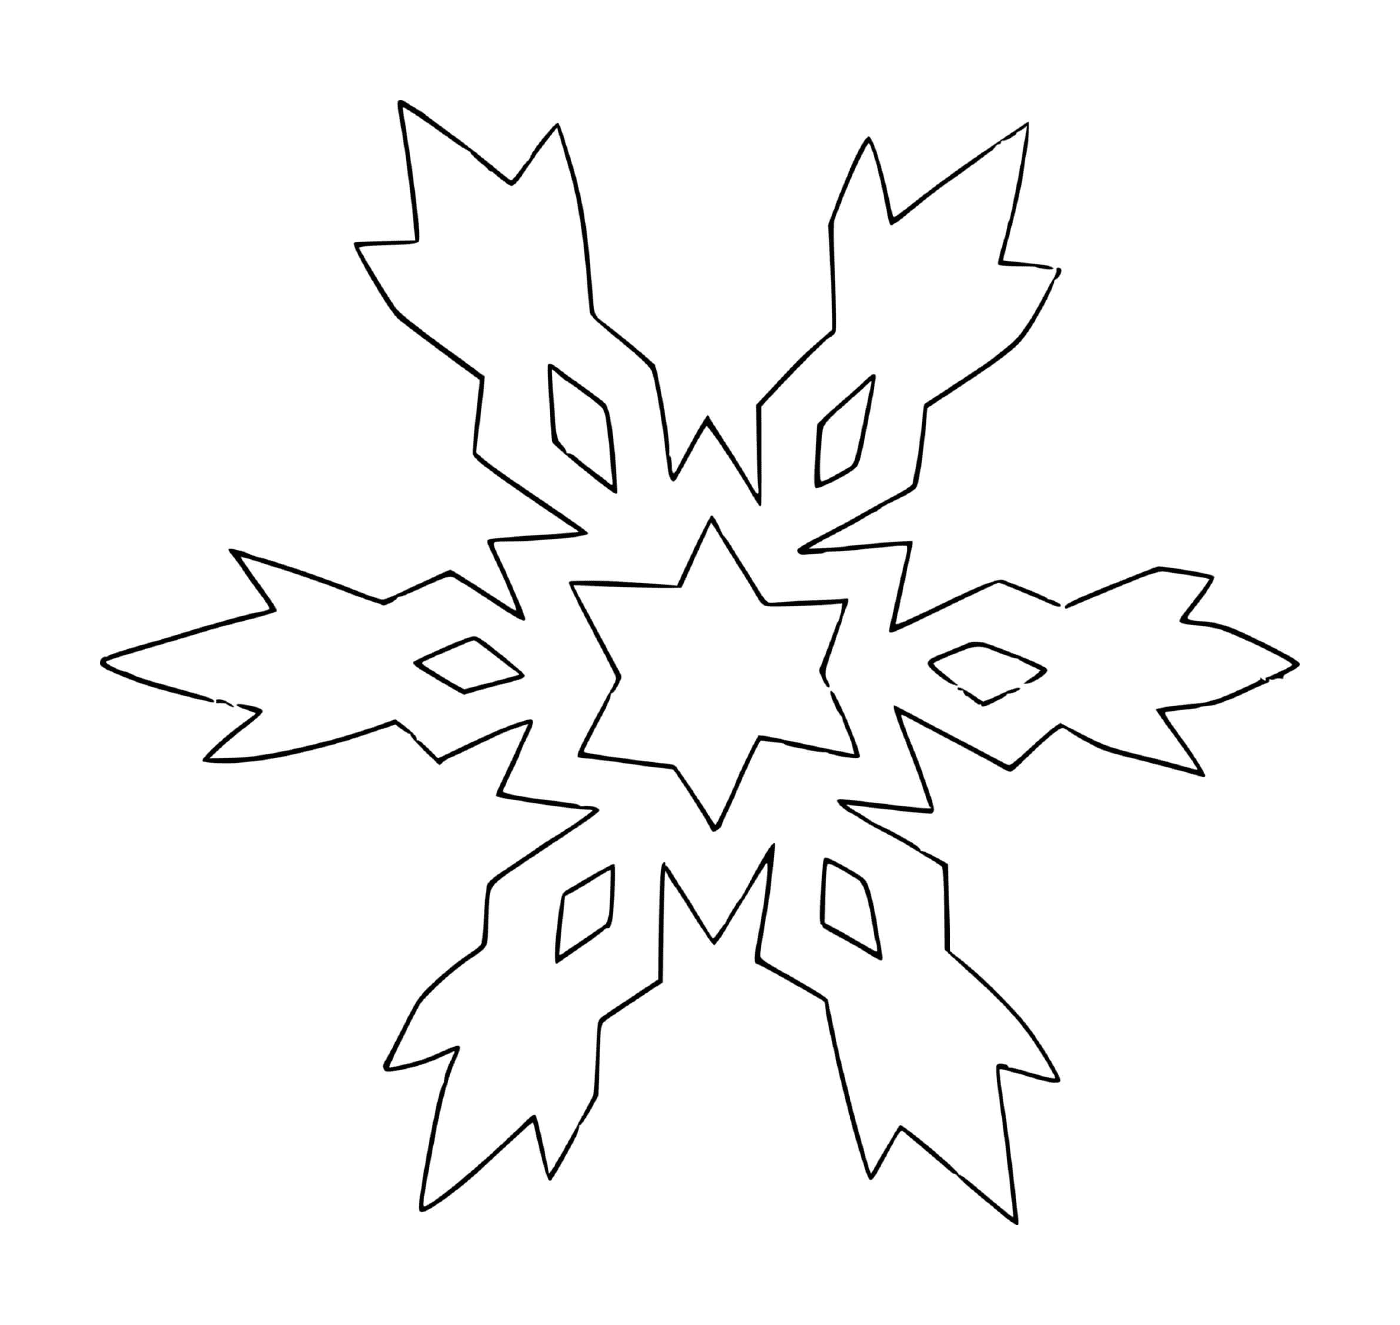  Snowflake star 